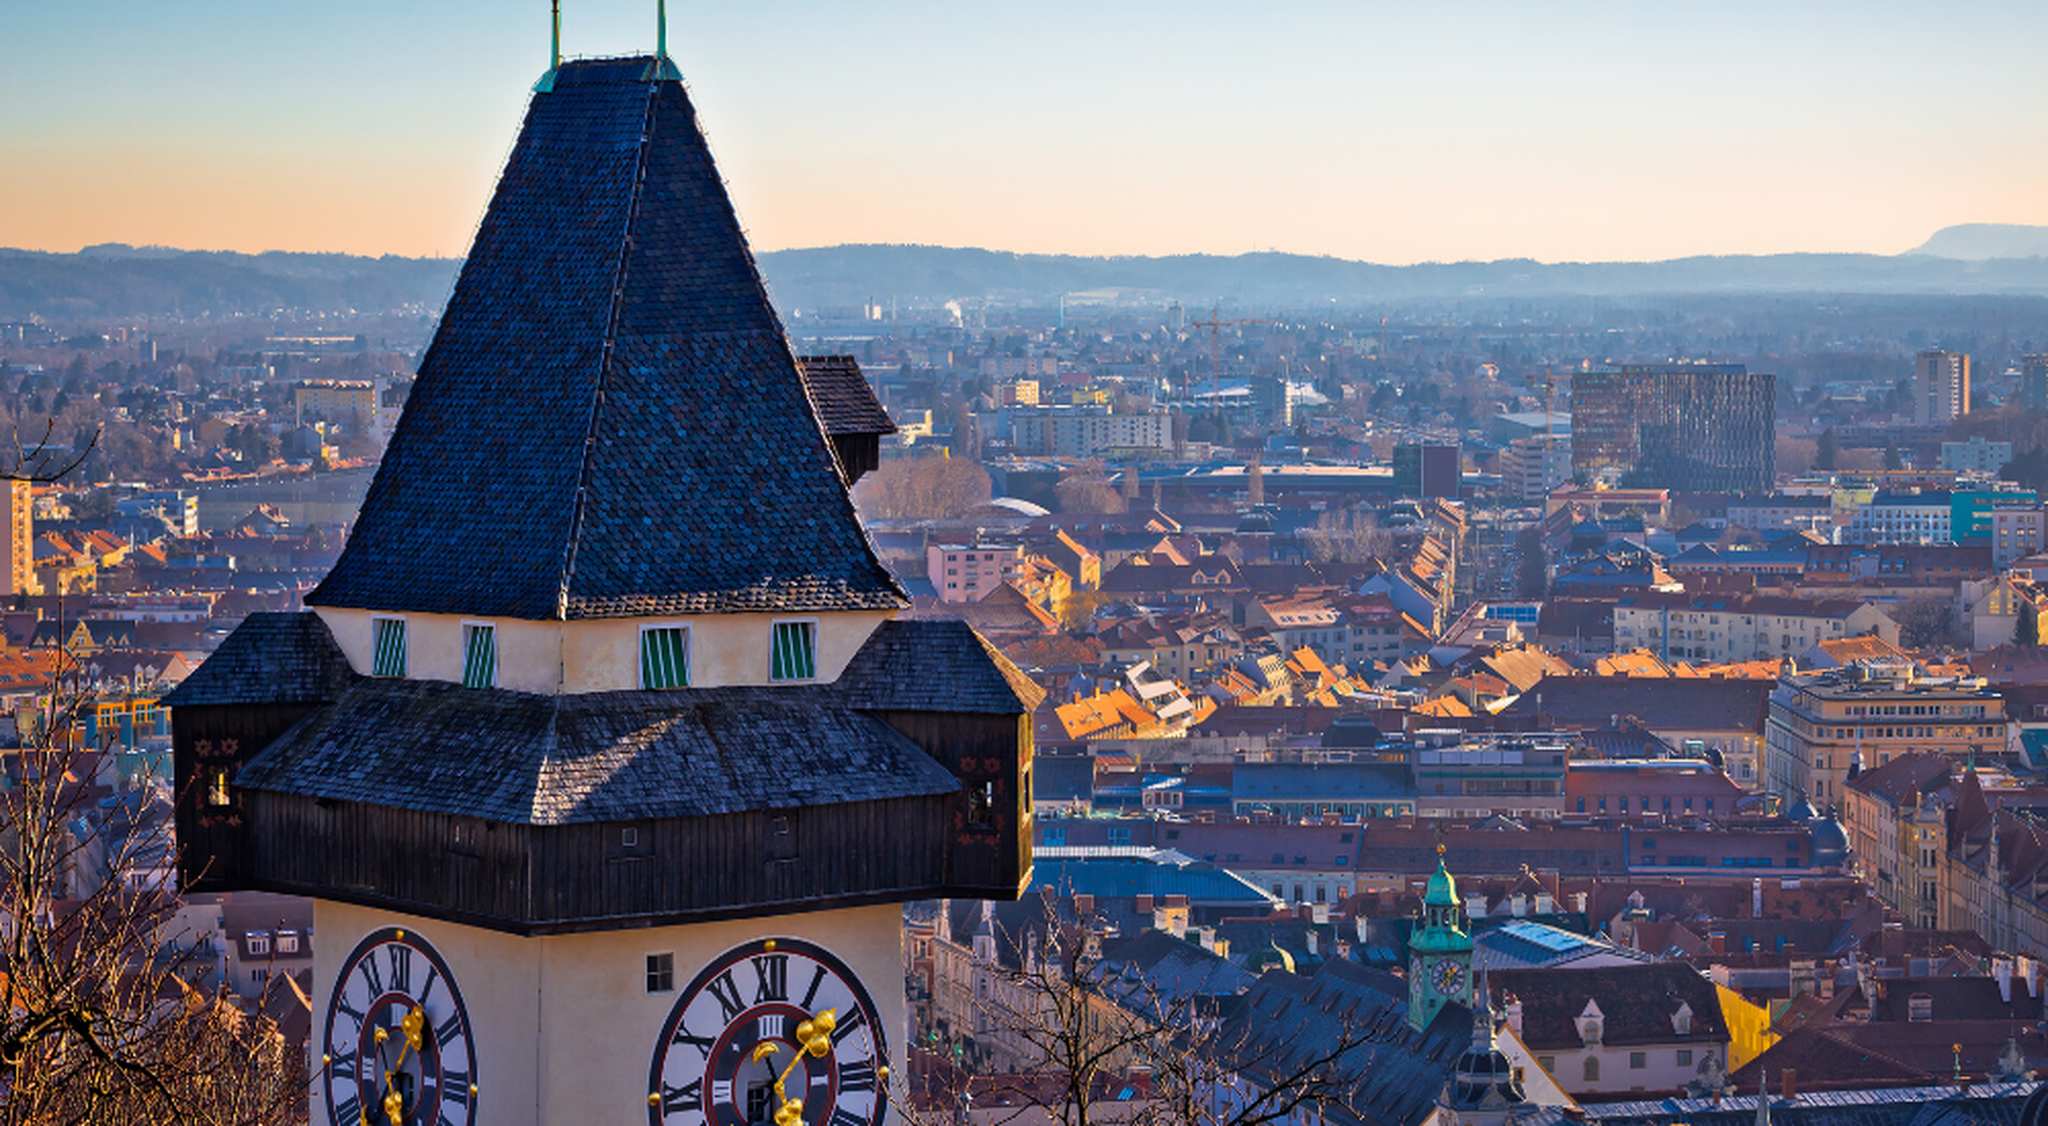 Uhrturm Graz